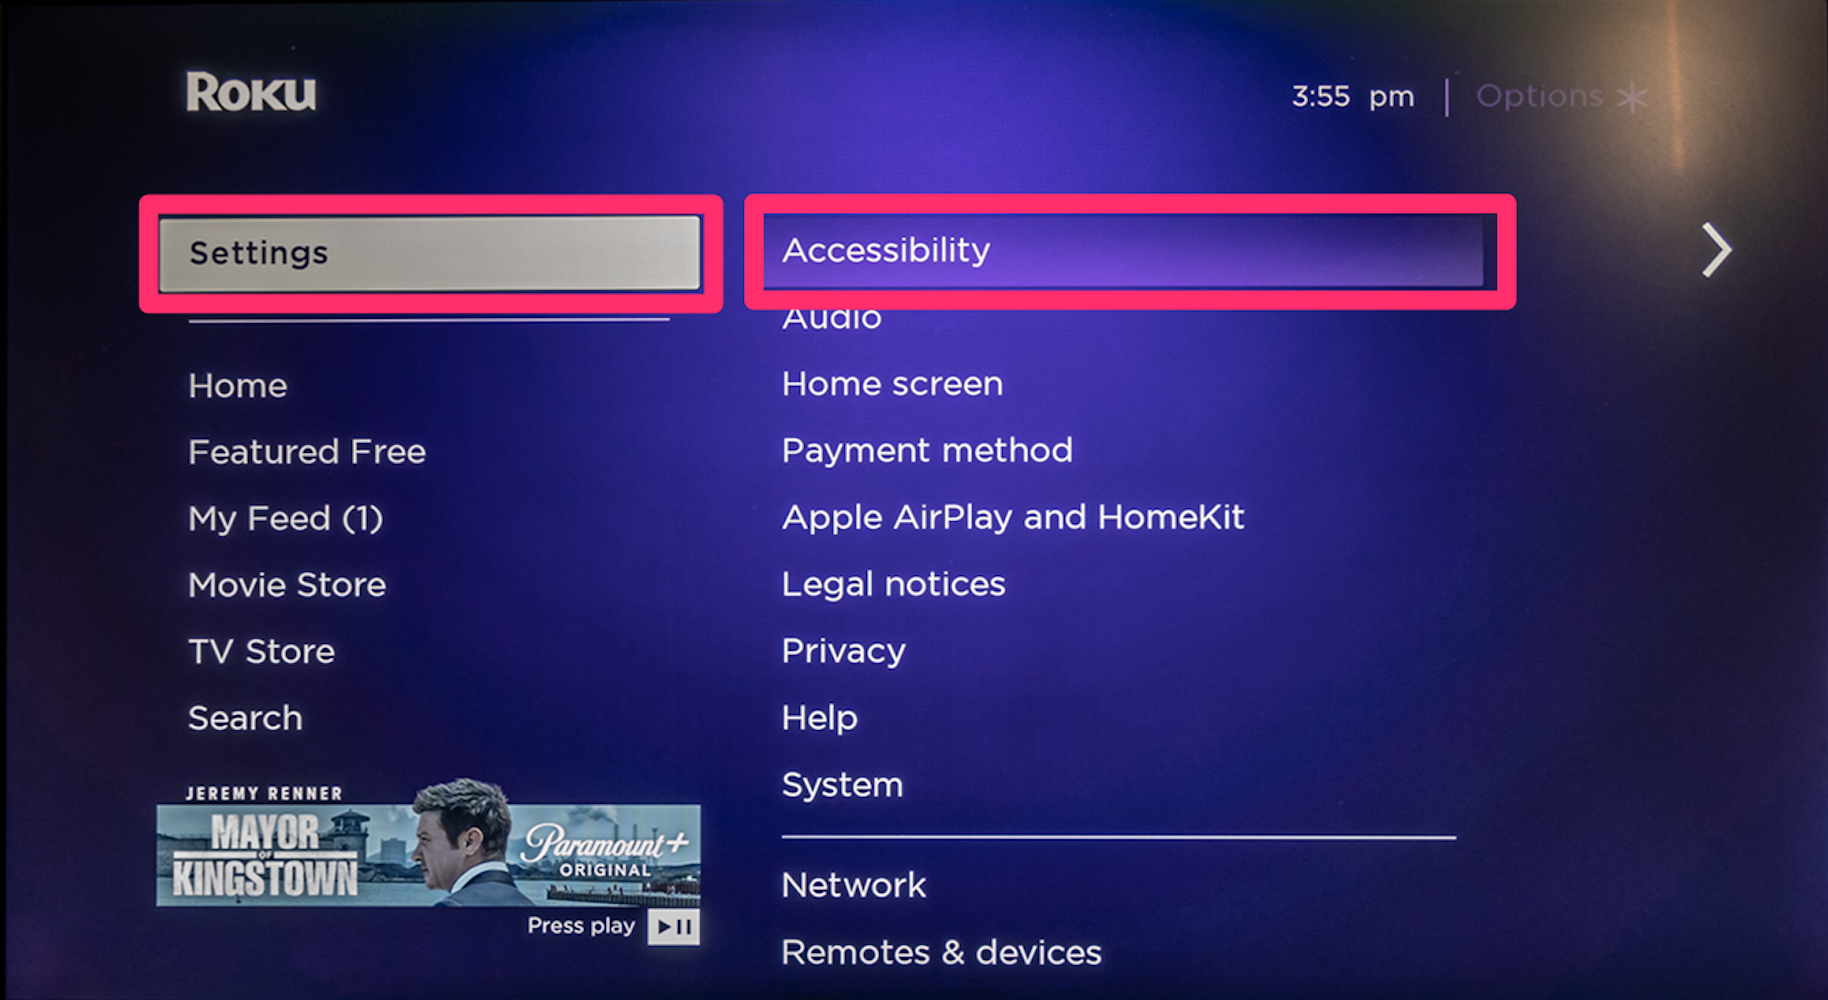 Screenshot of Accessibility option in Roku Settings menu